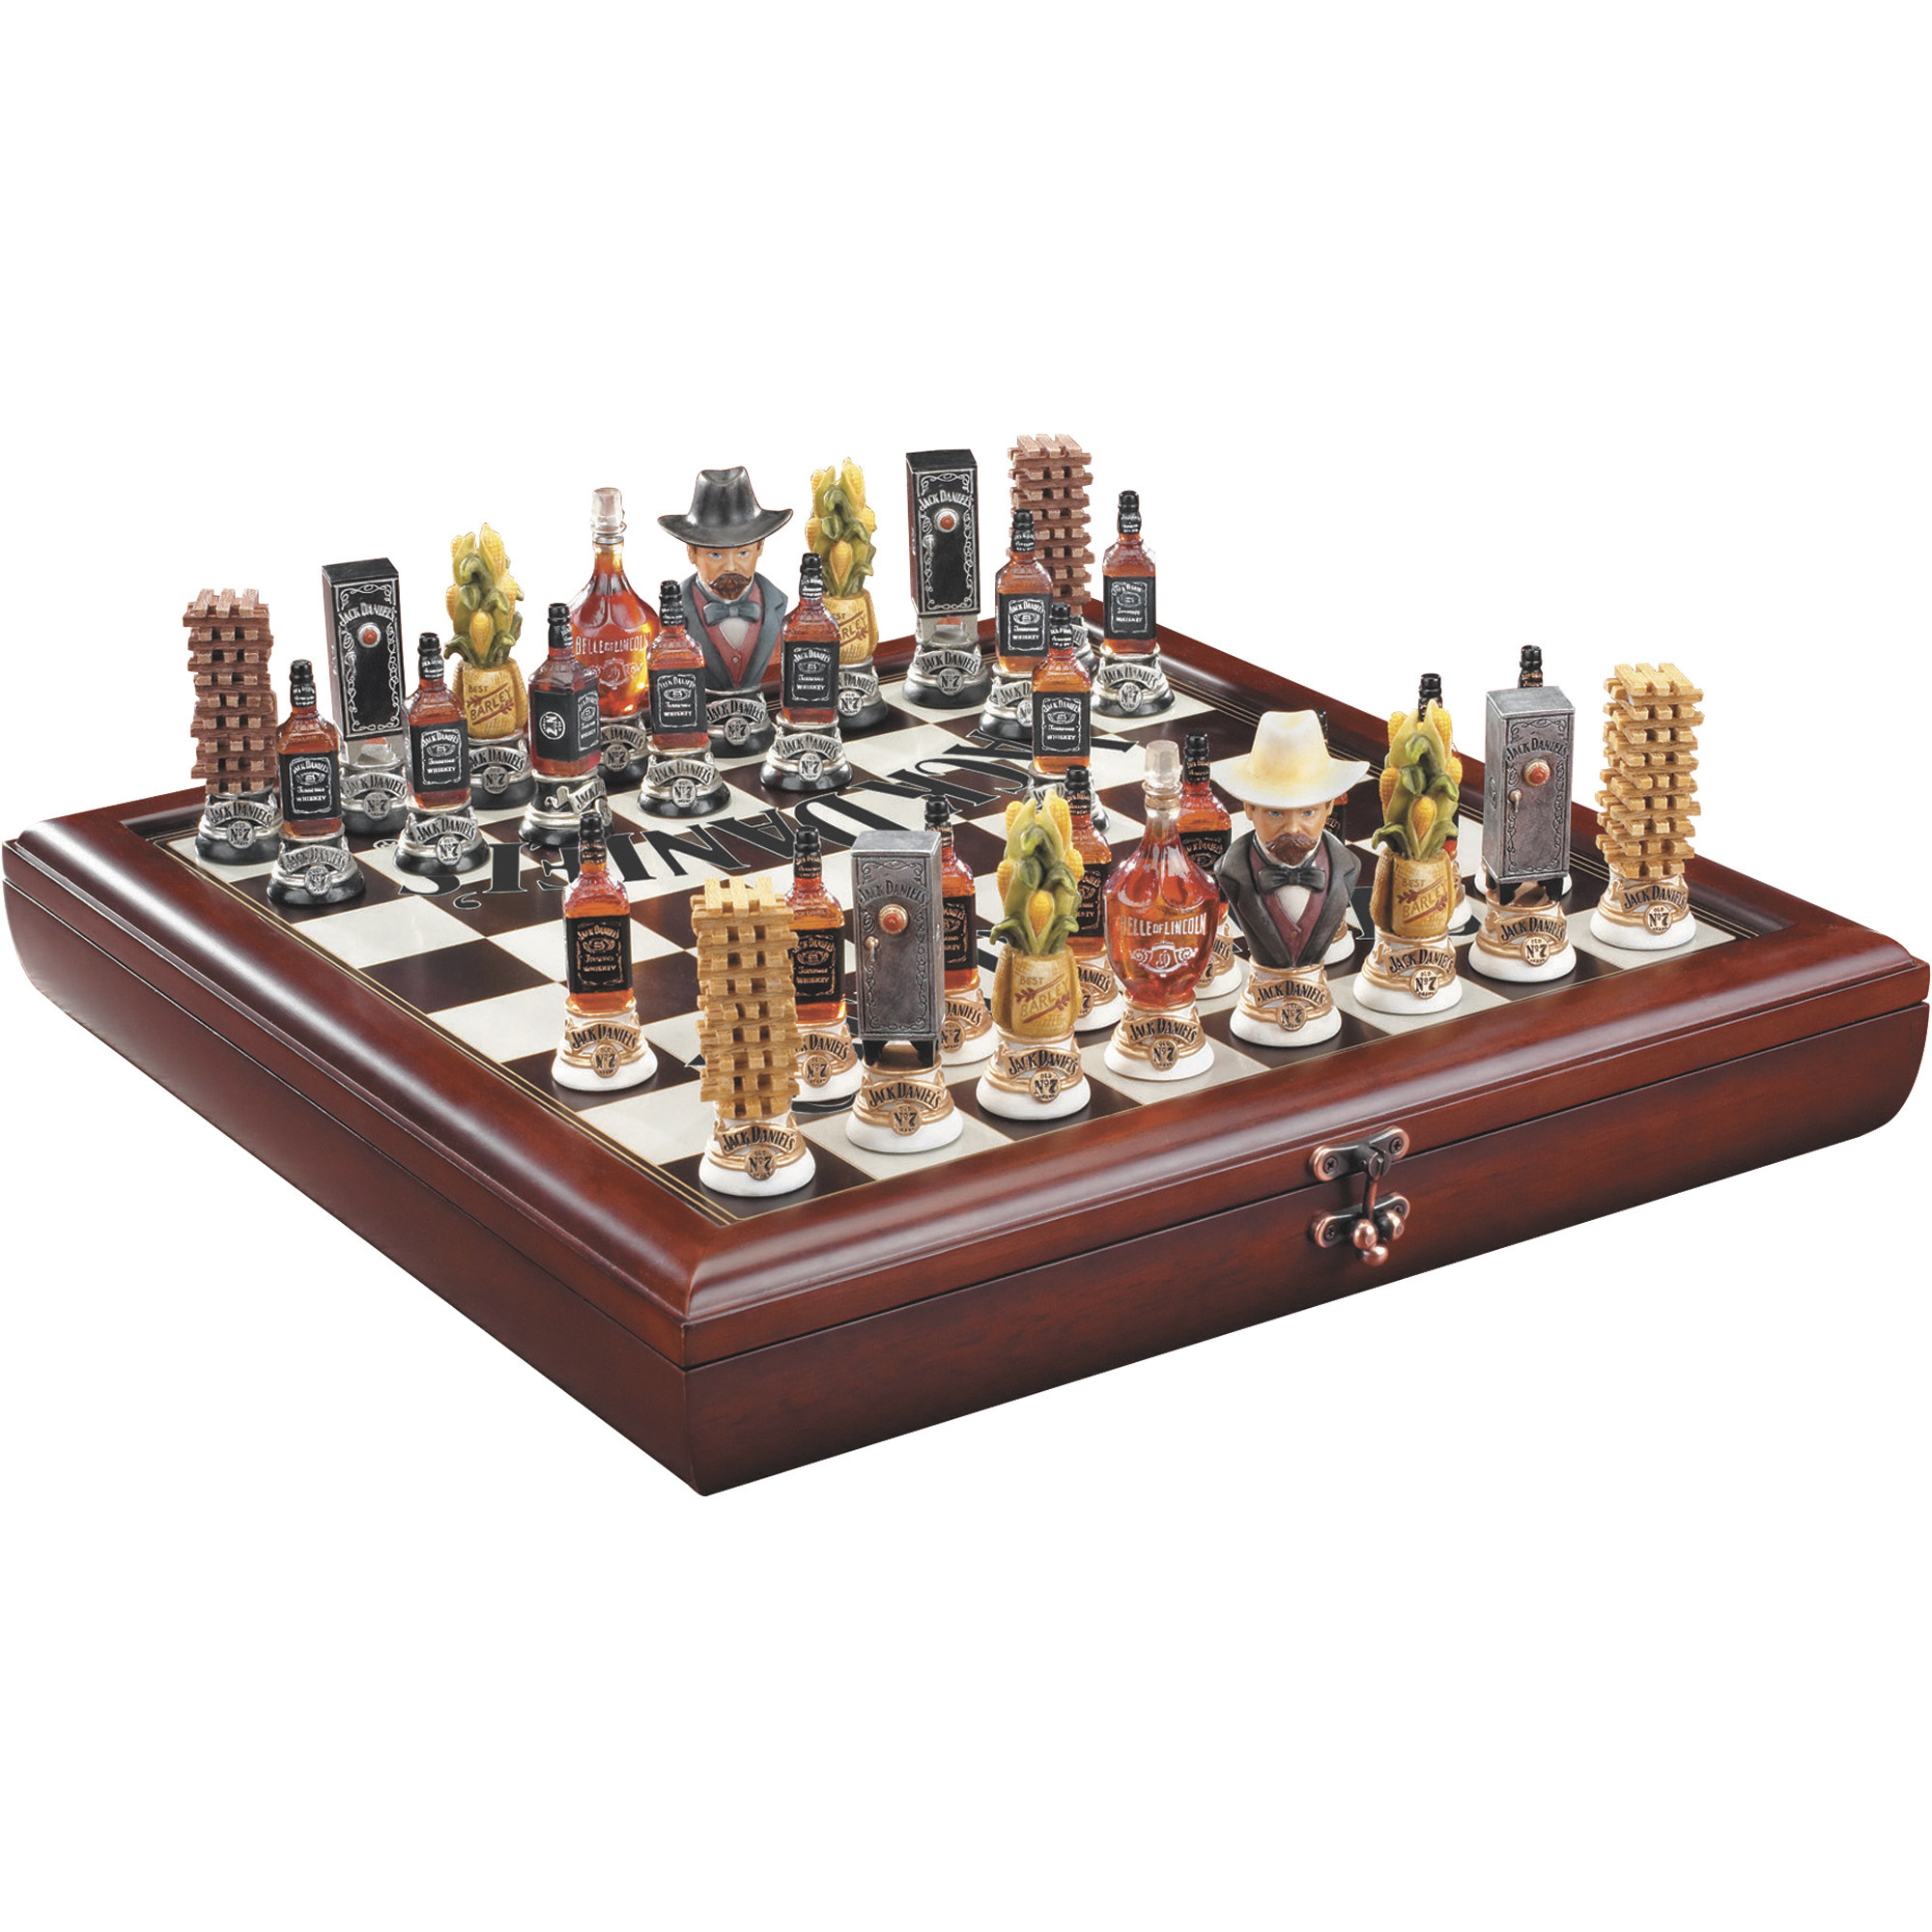 Jack Daniel's Wooden Chess Set â Includes Board and Pieces, Model JDR-390